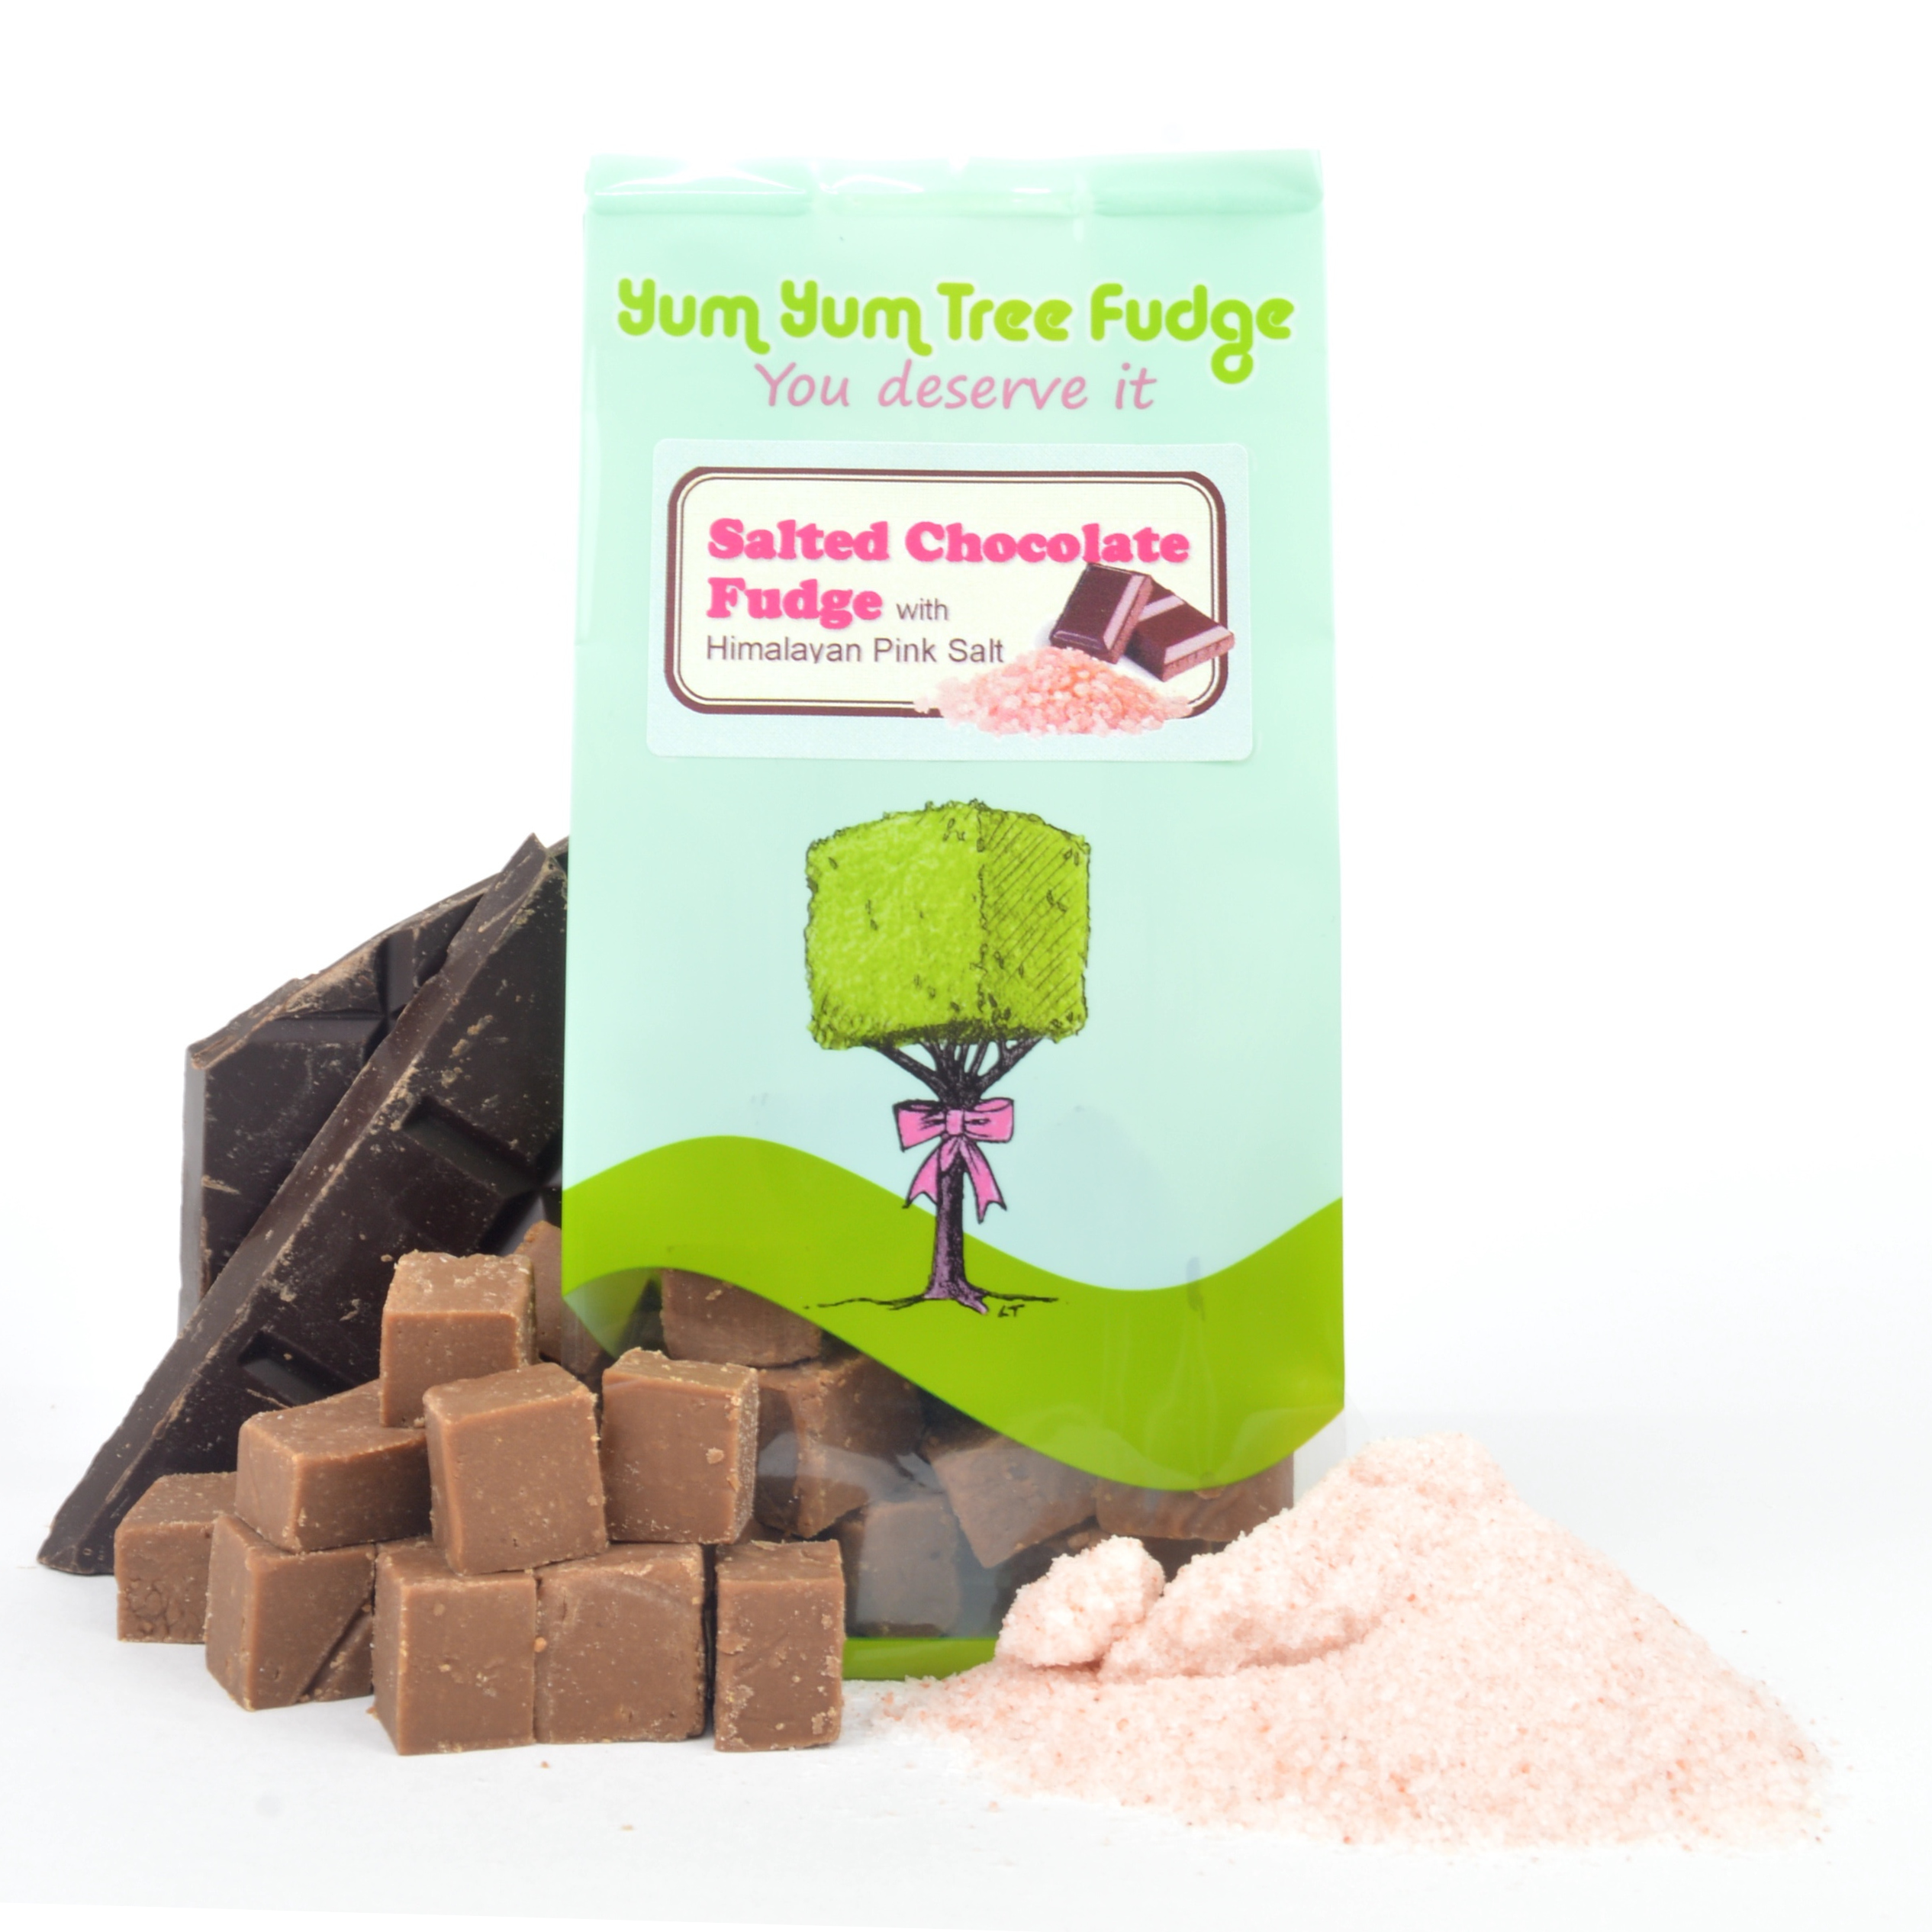 Salted Chocolate Fudge with Himalayan Pink Salt by Yum Yum Tree Fudge